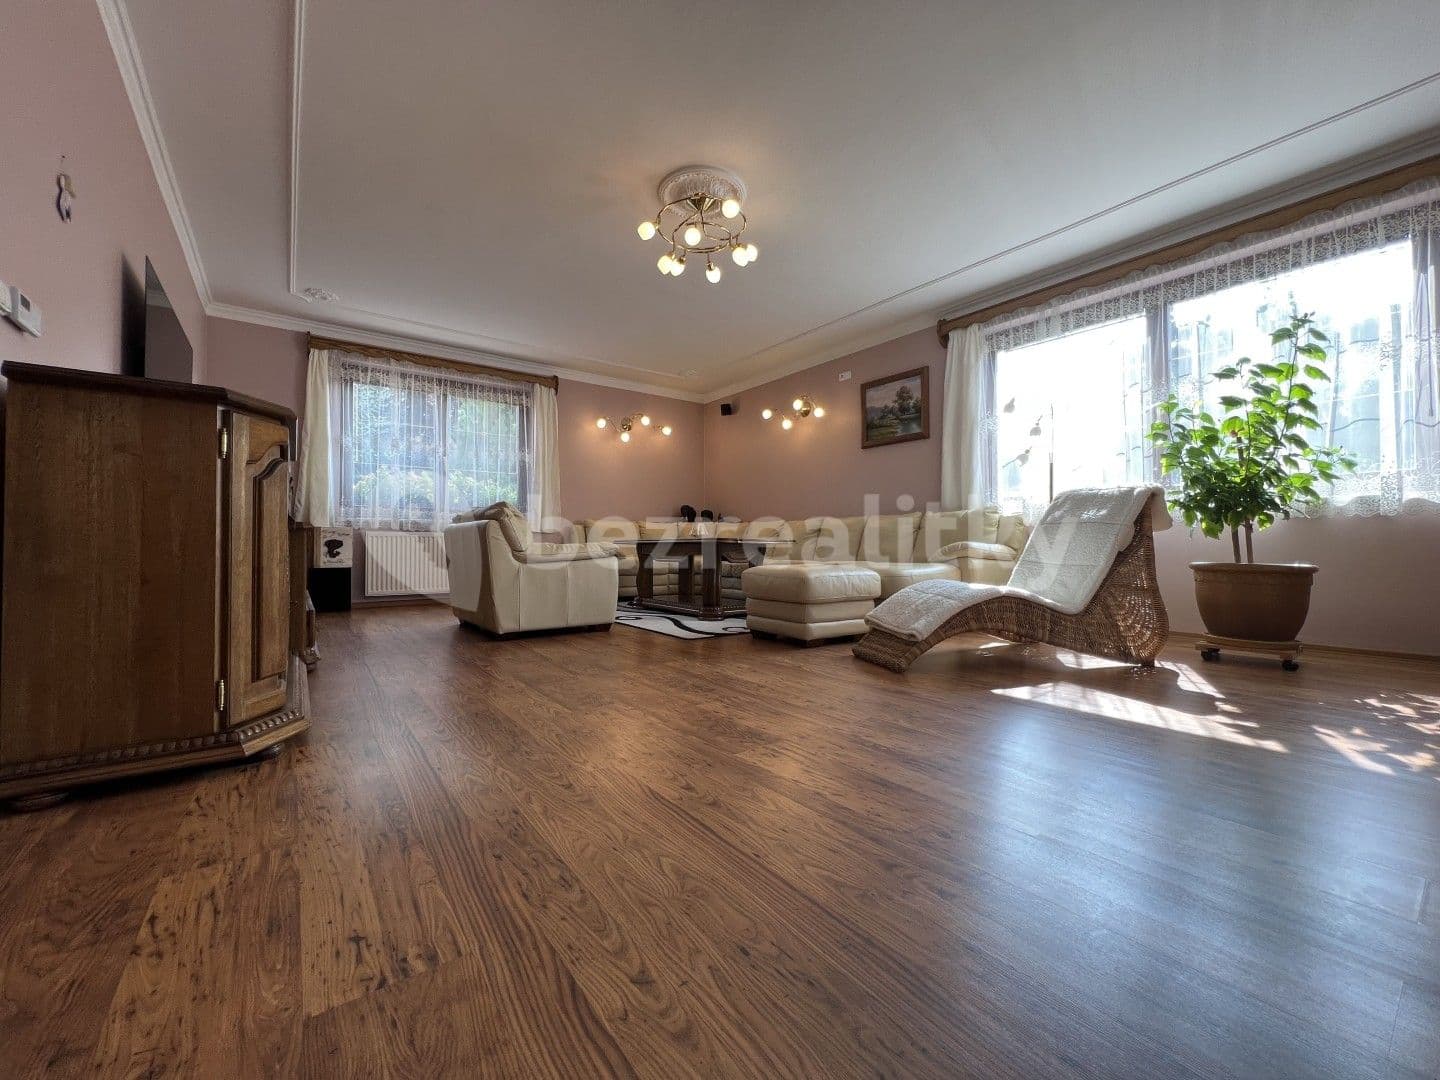 Predaj domu 474 m², pozemek 6.639 m², Velký Týnec, Olomoucký kraj